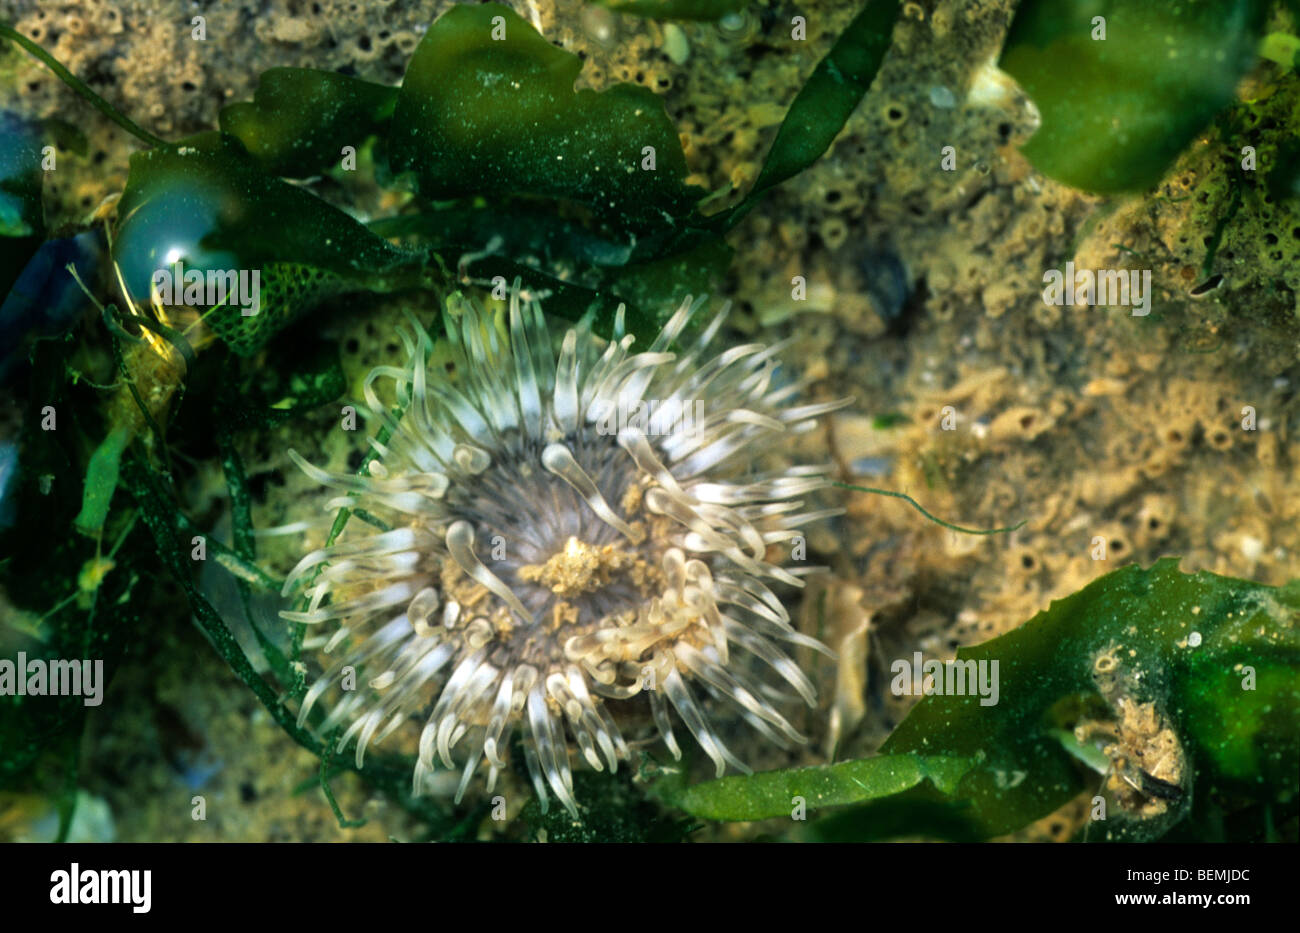 Sea anemone (Actiniaria sp.) in tide pool, Belgium Stock Photo